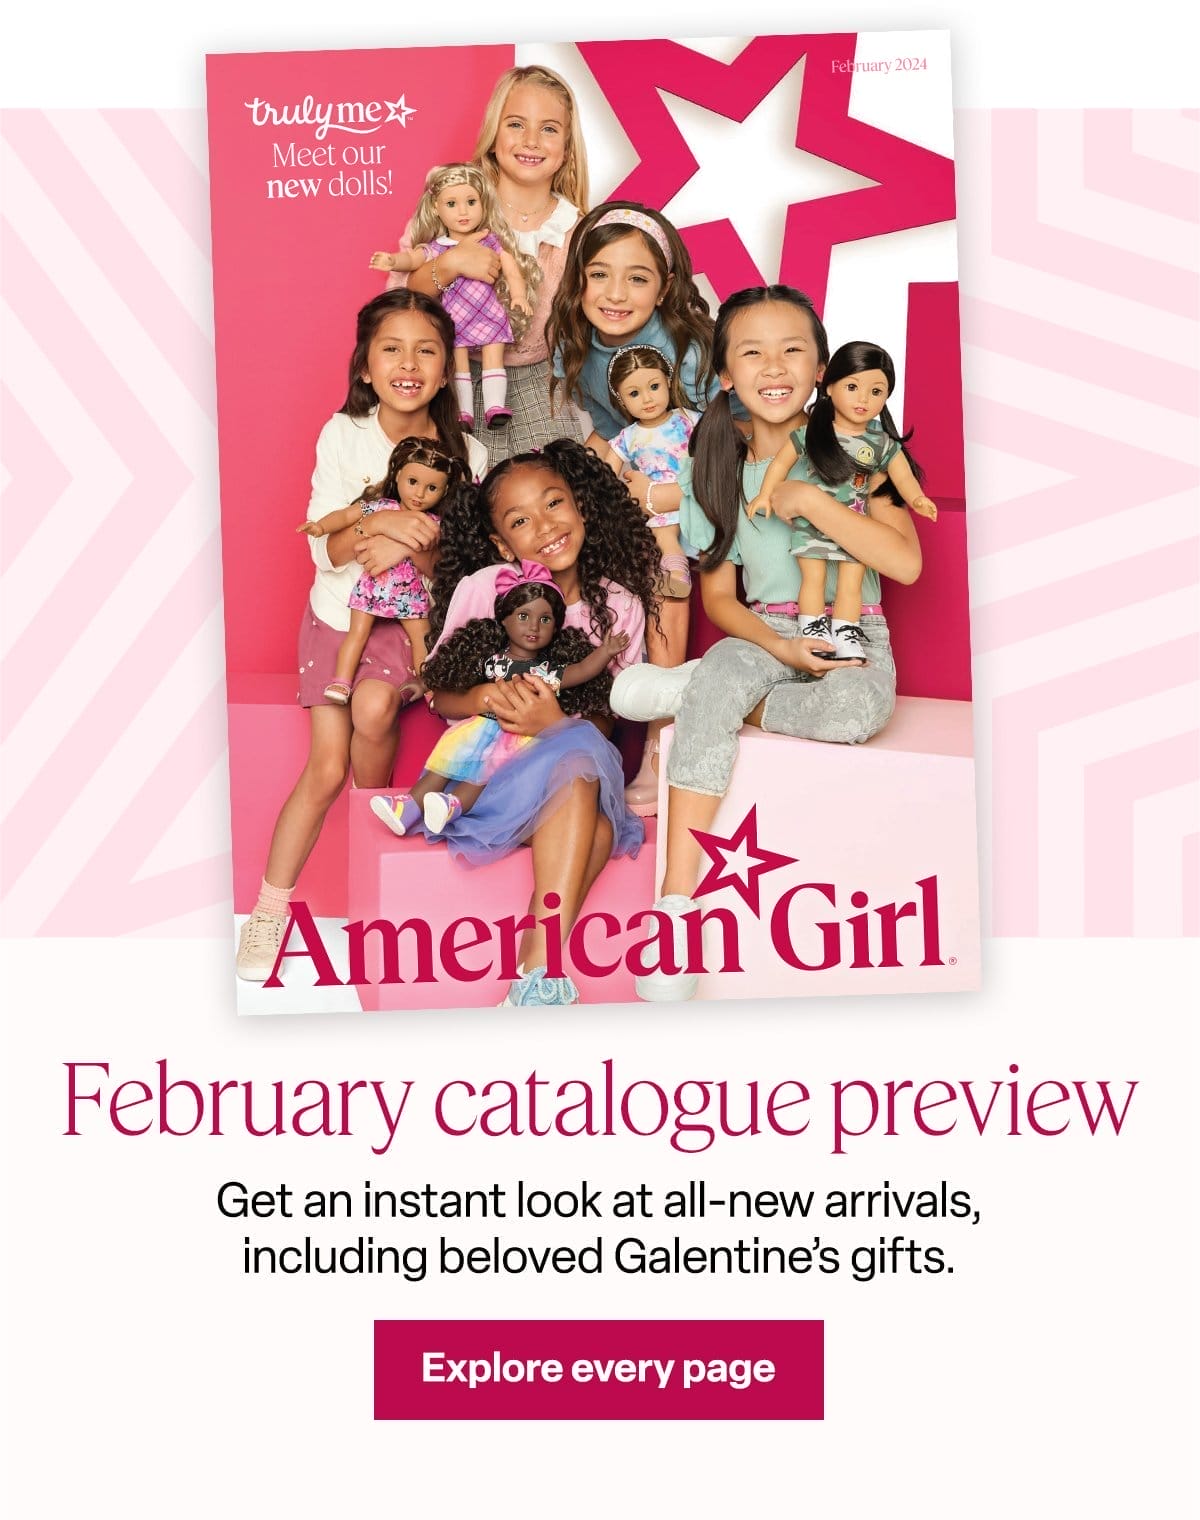 H: February catalogue preview